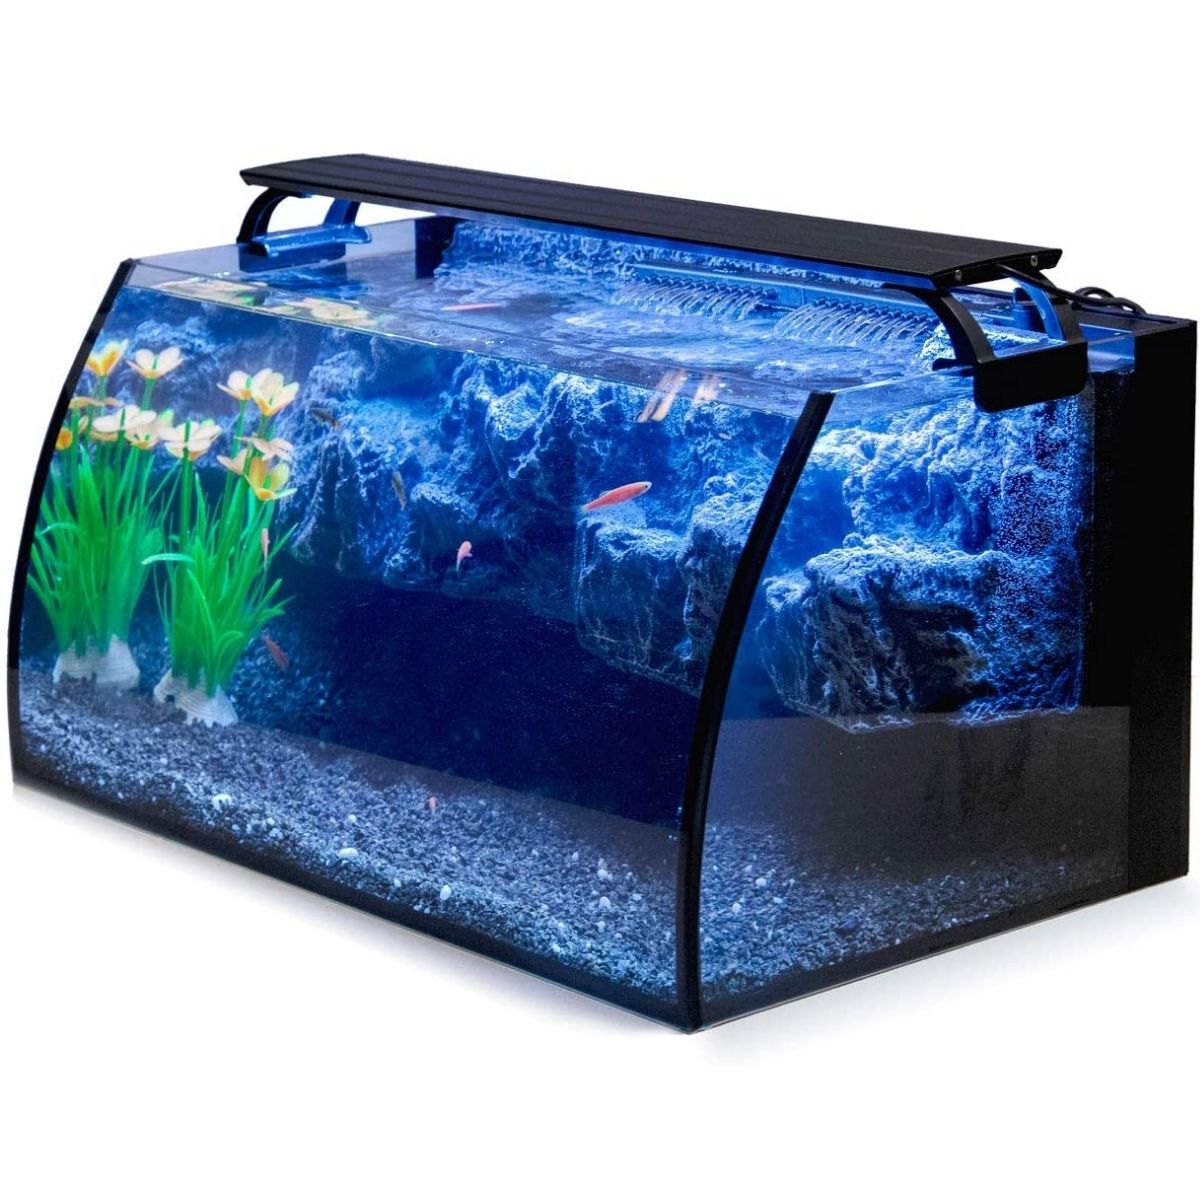 The Best Bow Front Shrimp Aquarium Hygger Horizon 8 Gallon Aquarium Kit